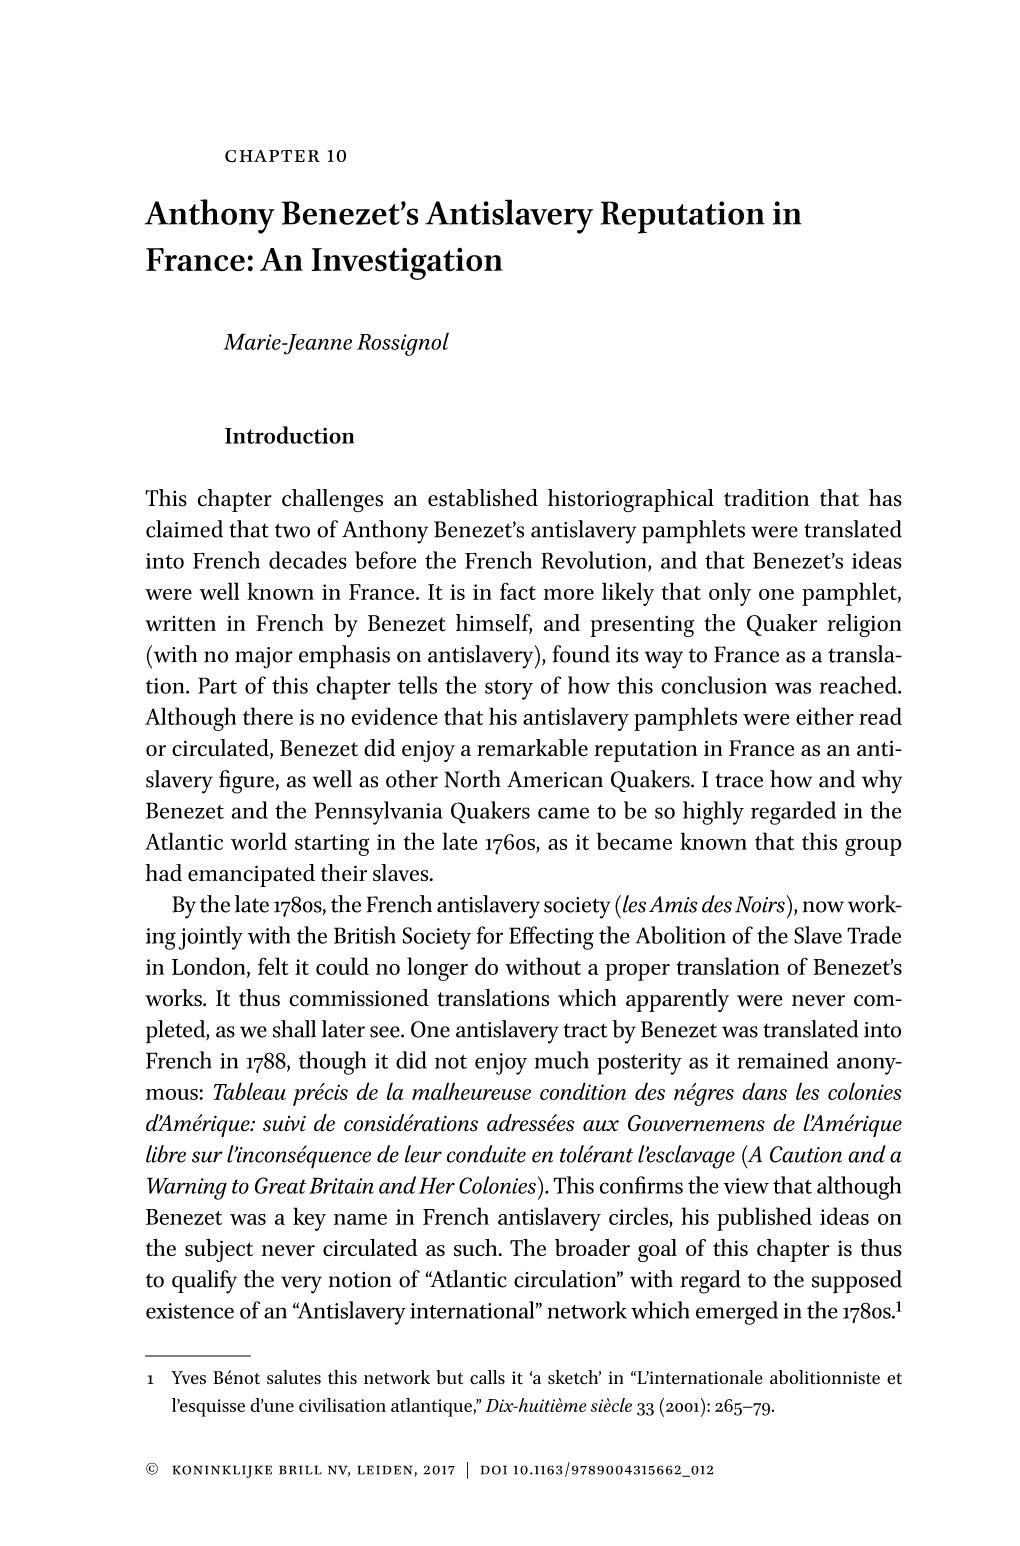 Anthony Benezet's Antislavery Reputation in France